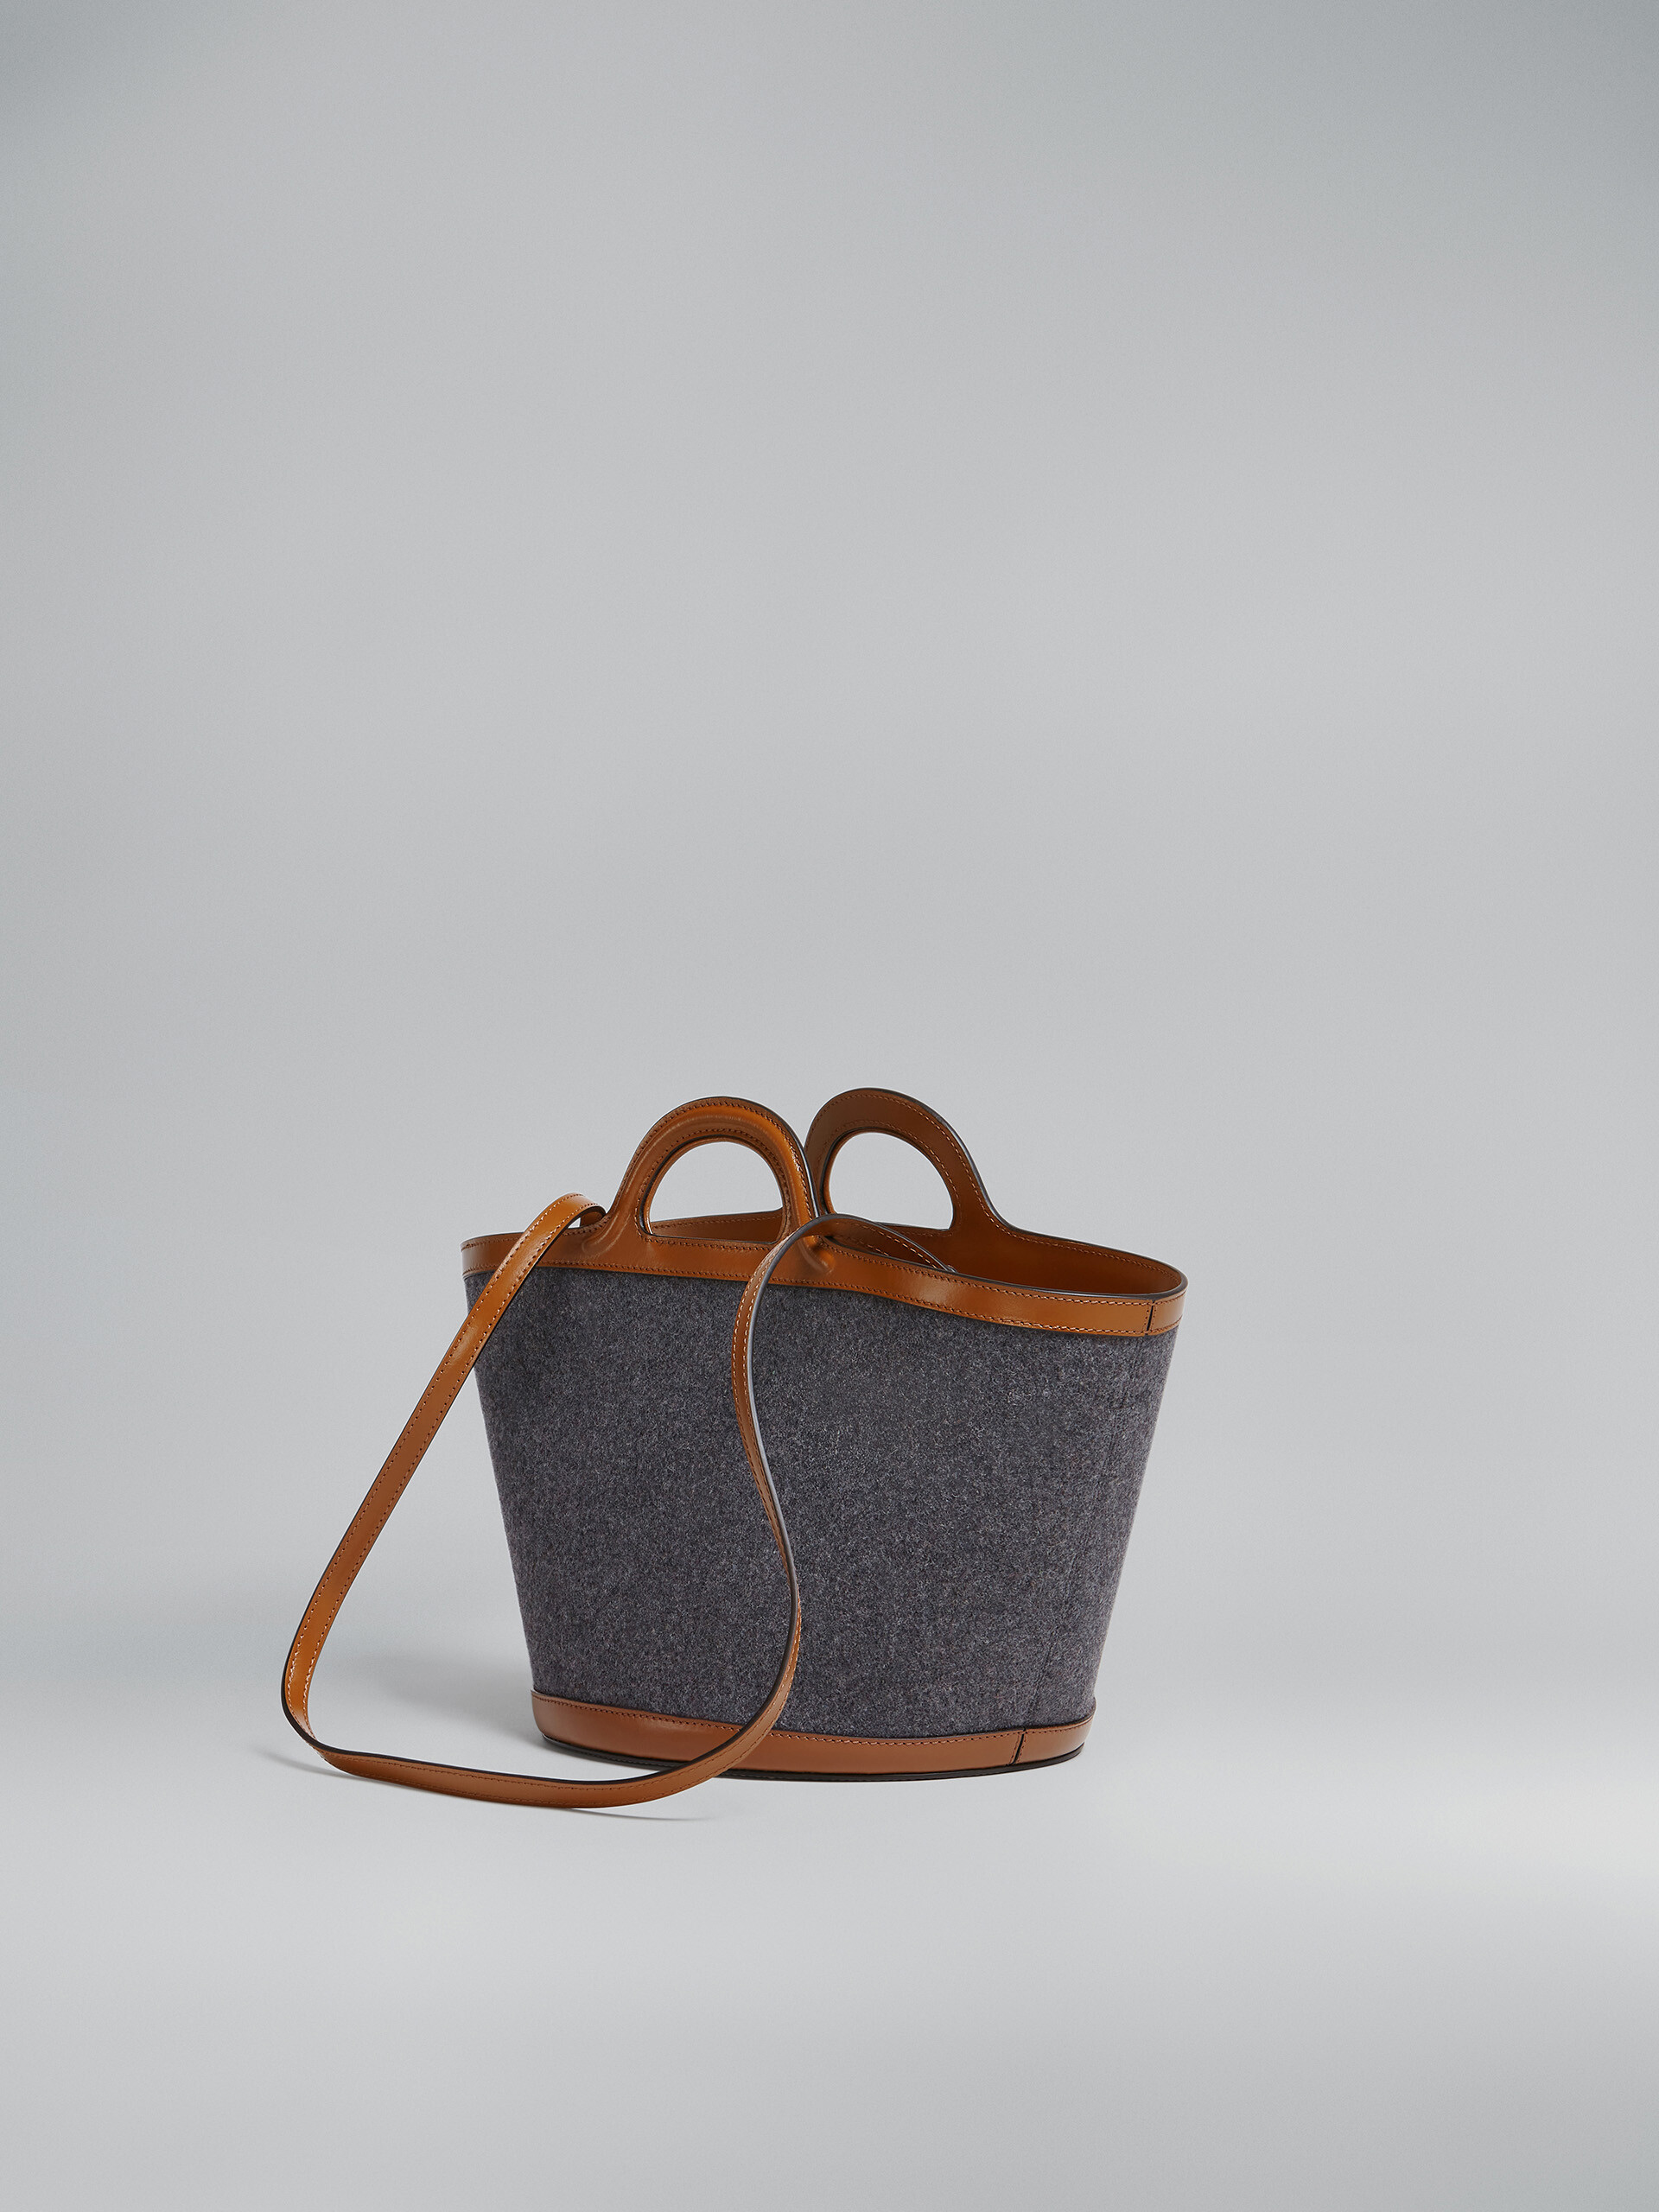 TROPICALIA small bag in felt and leather - Handbags - Image 3